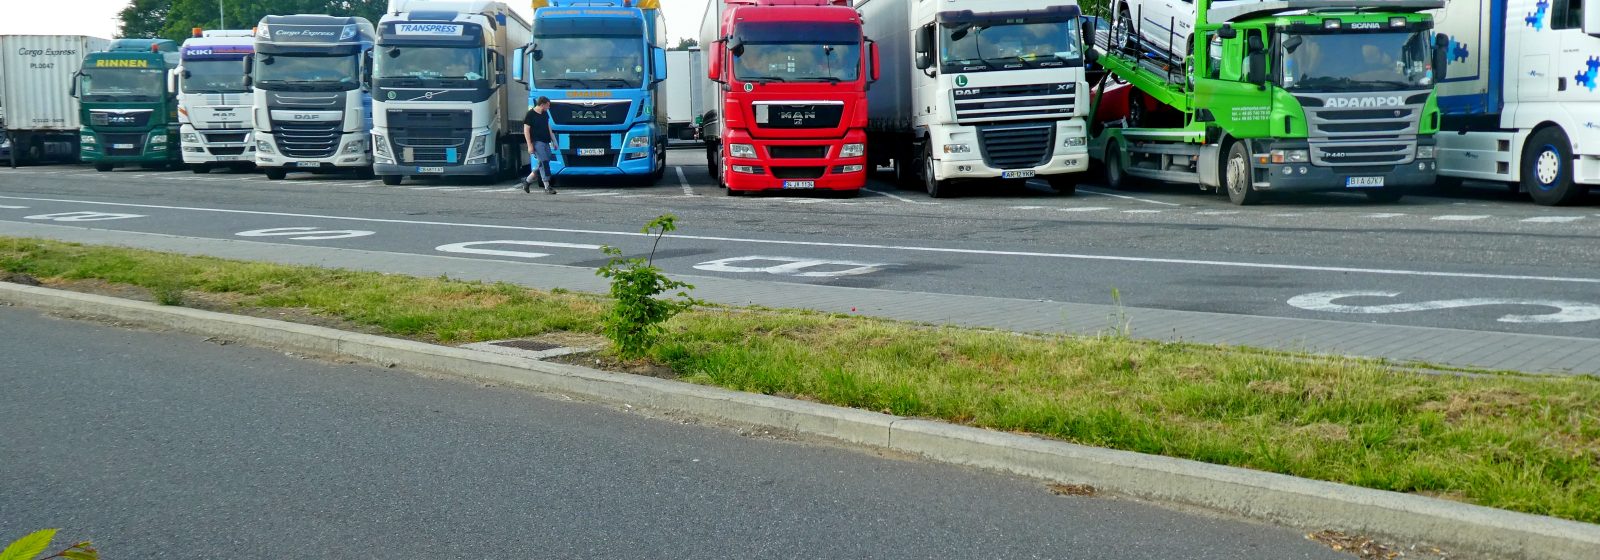 Vrachtwagens trucks op snelwegparking Ranst E313